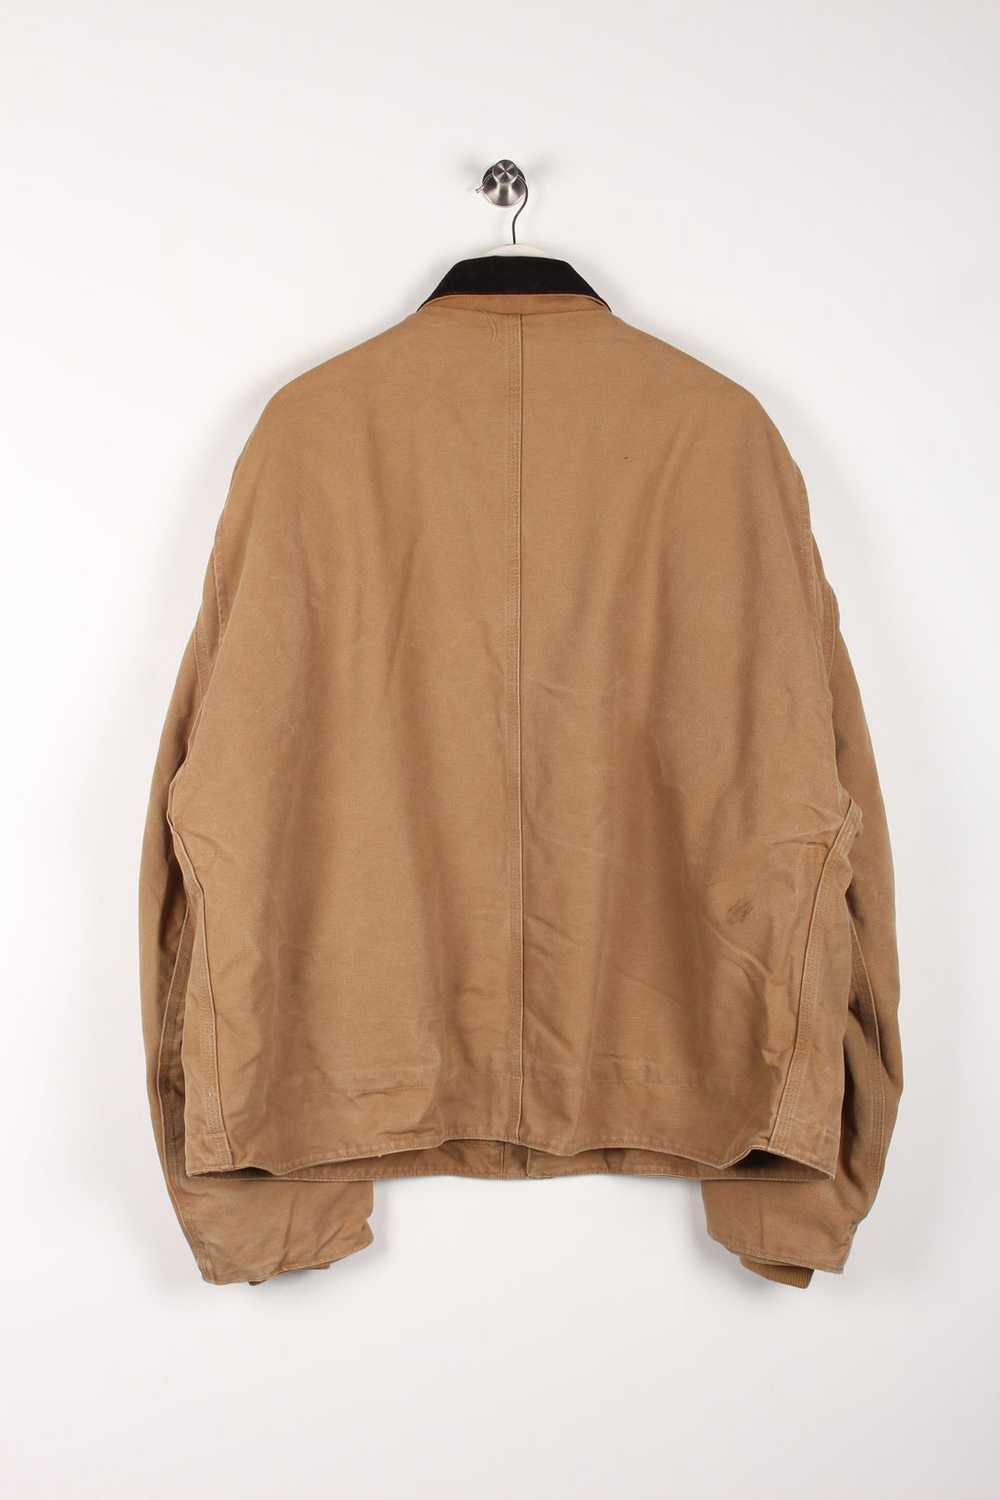 Vintage Carhartt Jacket Beige XL - image 3